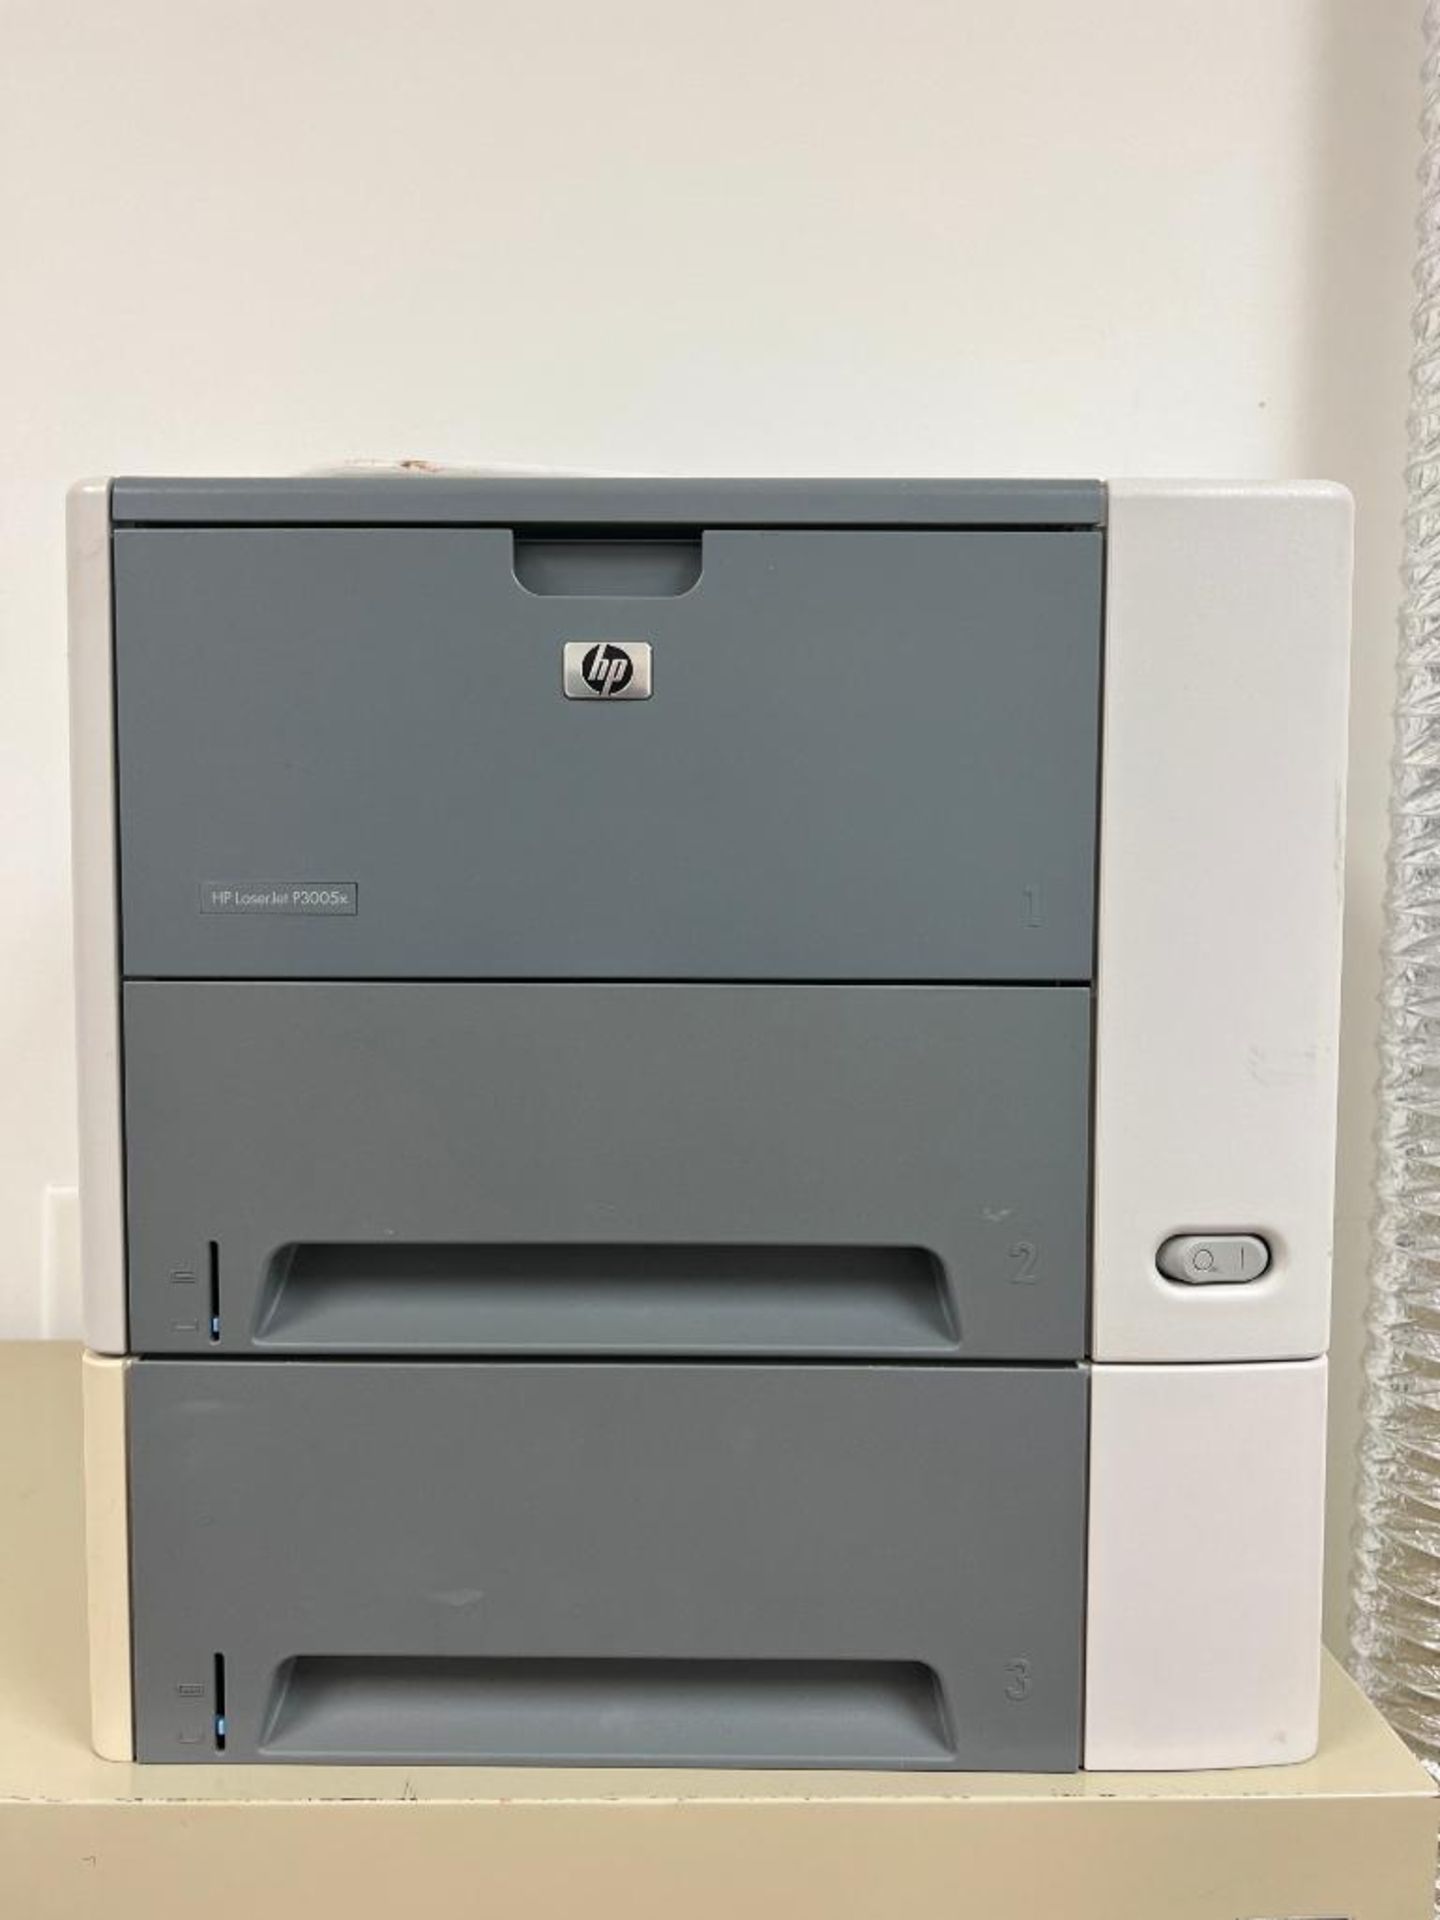 HP LaserJet P3005X and Xerox Phaser 8500 Desktop Printers - Image 2 of 2